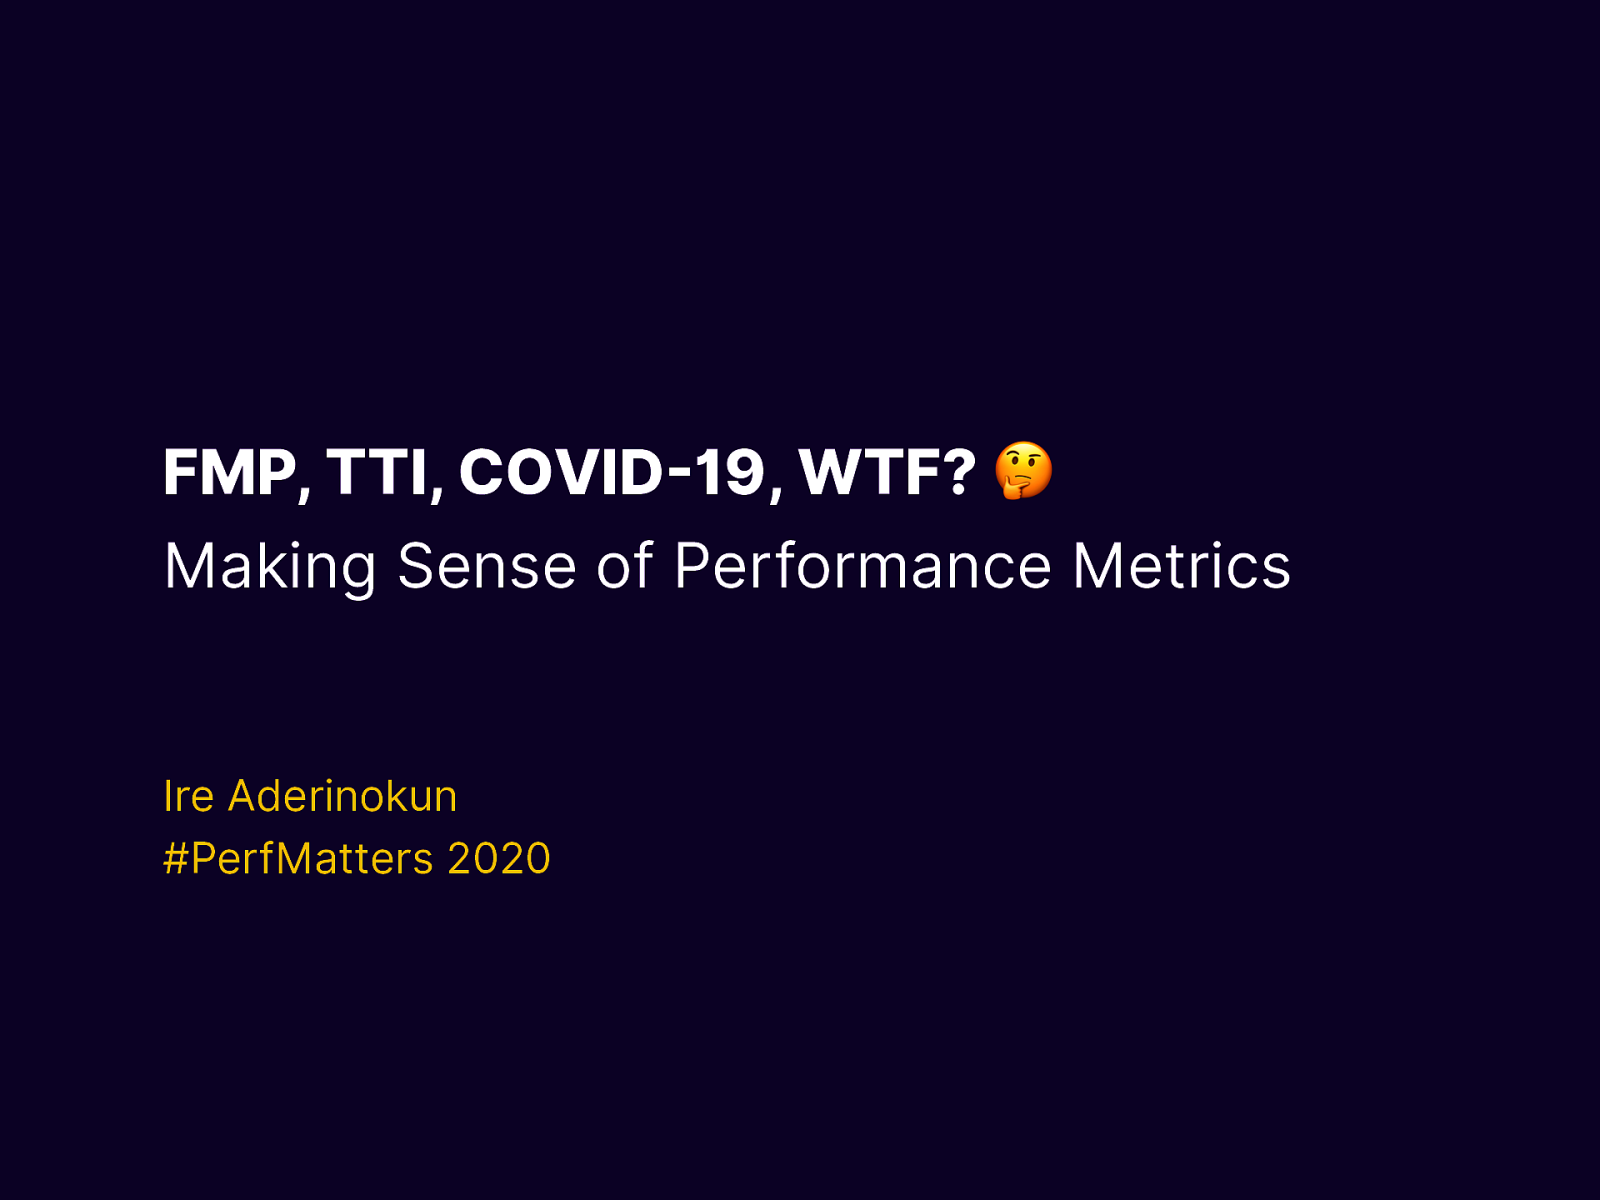 FMP, TTI, WTF? Making Sense of Web Performance